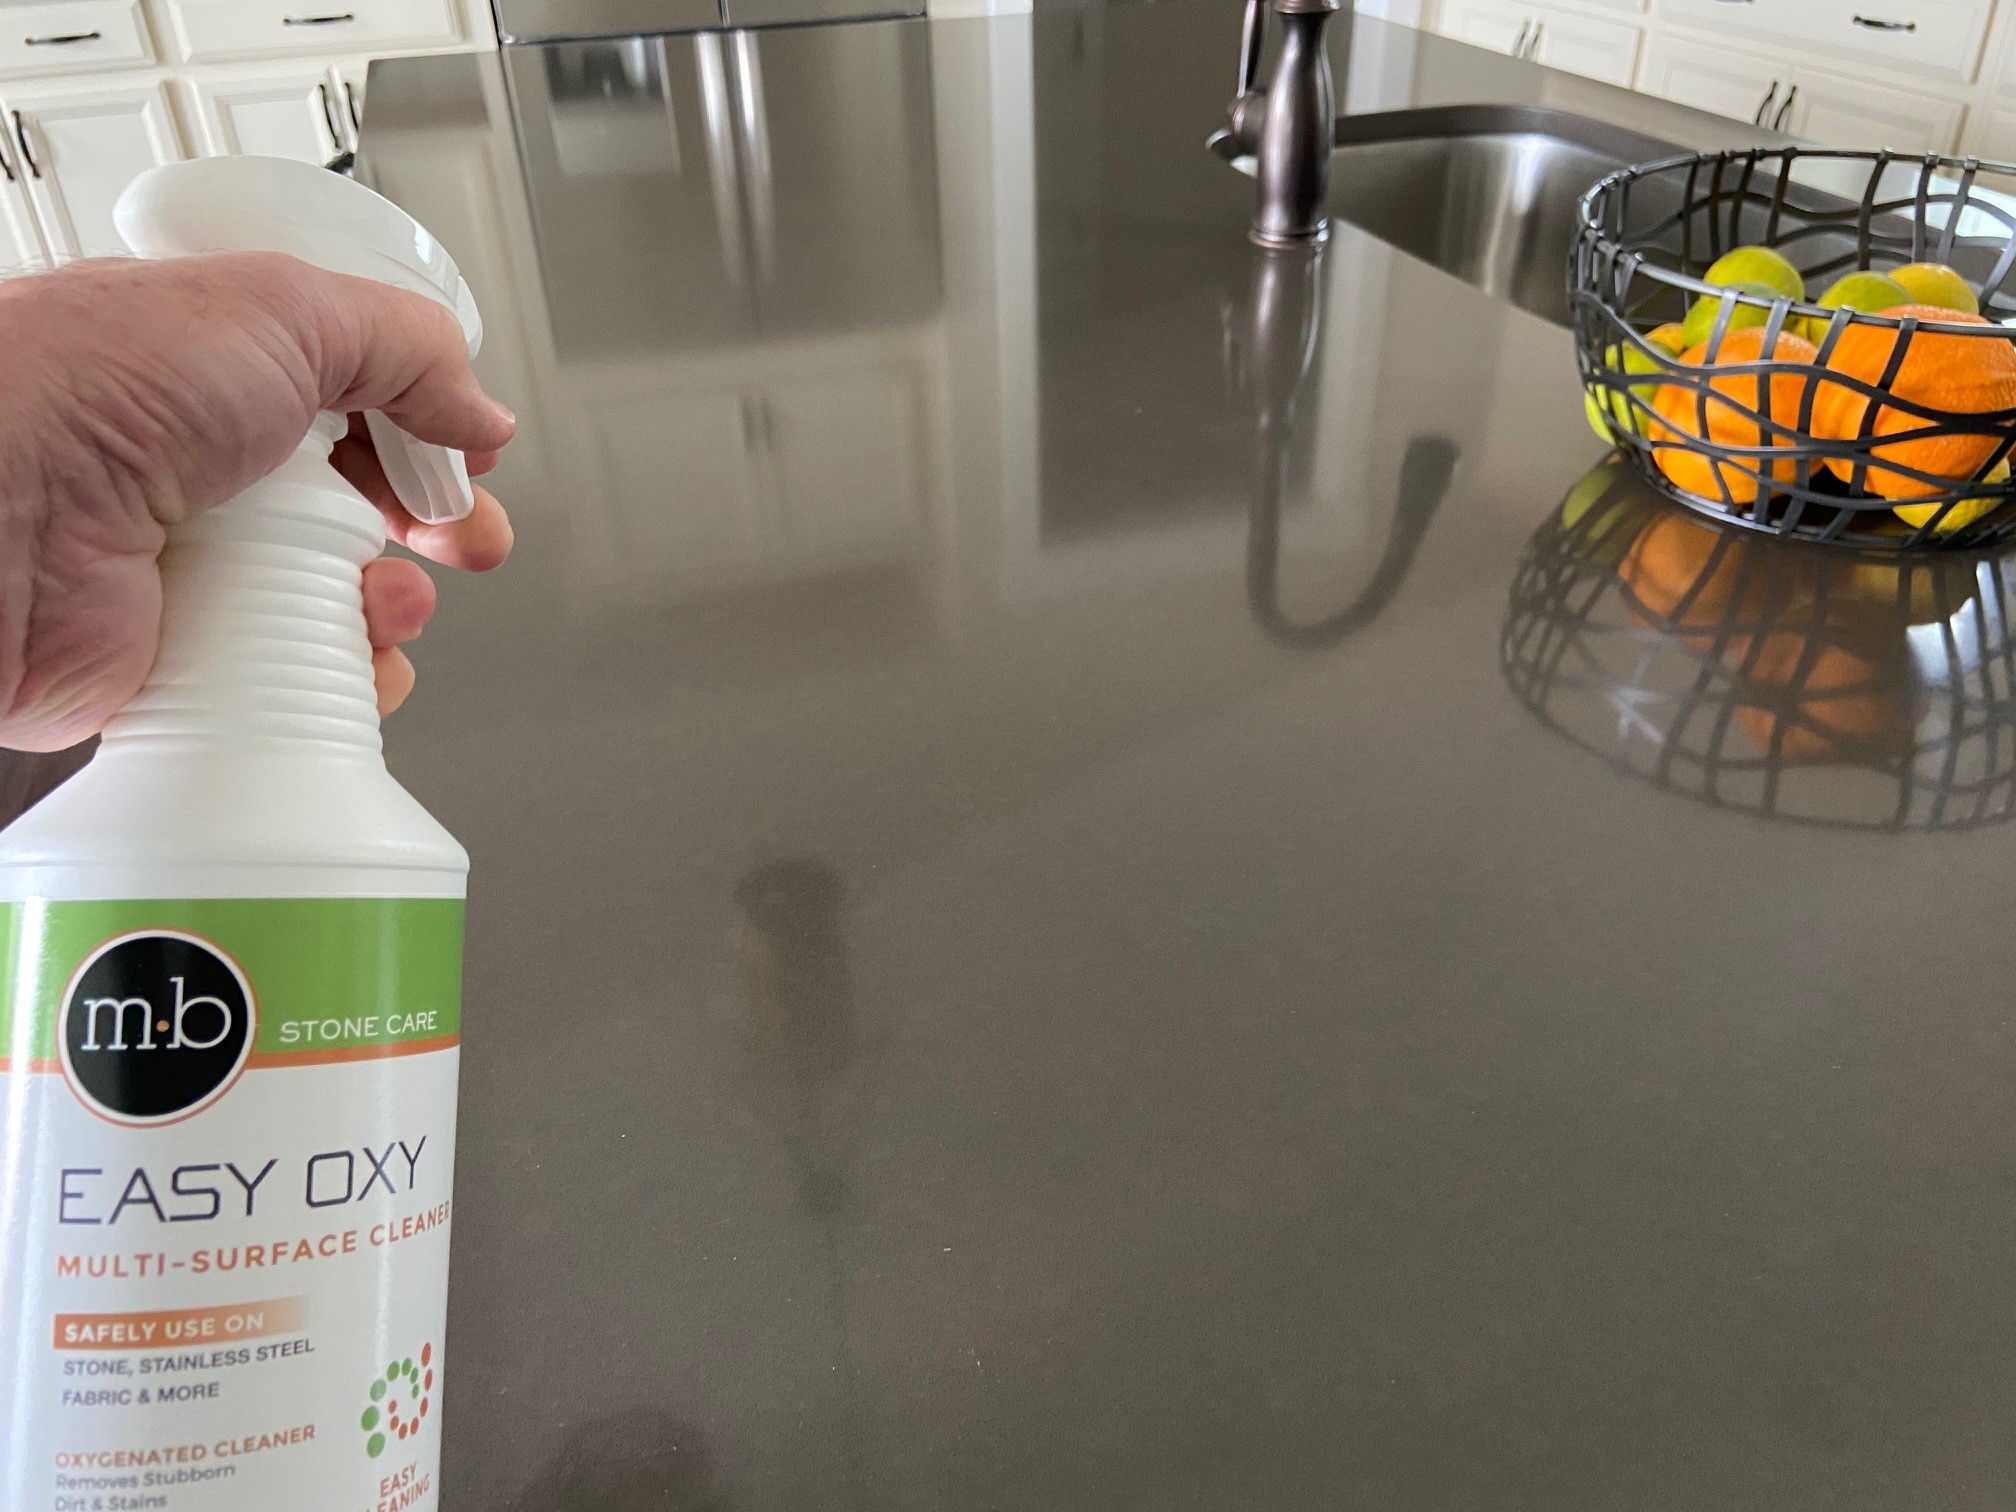 Best Way To Clean Granite Countertops, Is Windex With Vinegar Safe For Quartz Countertops